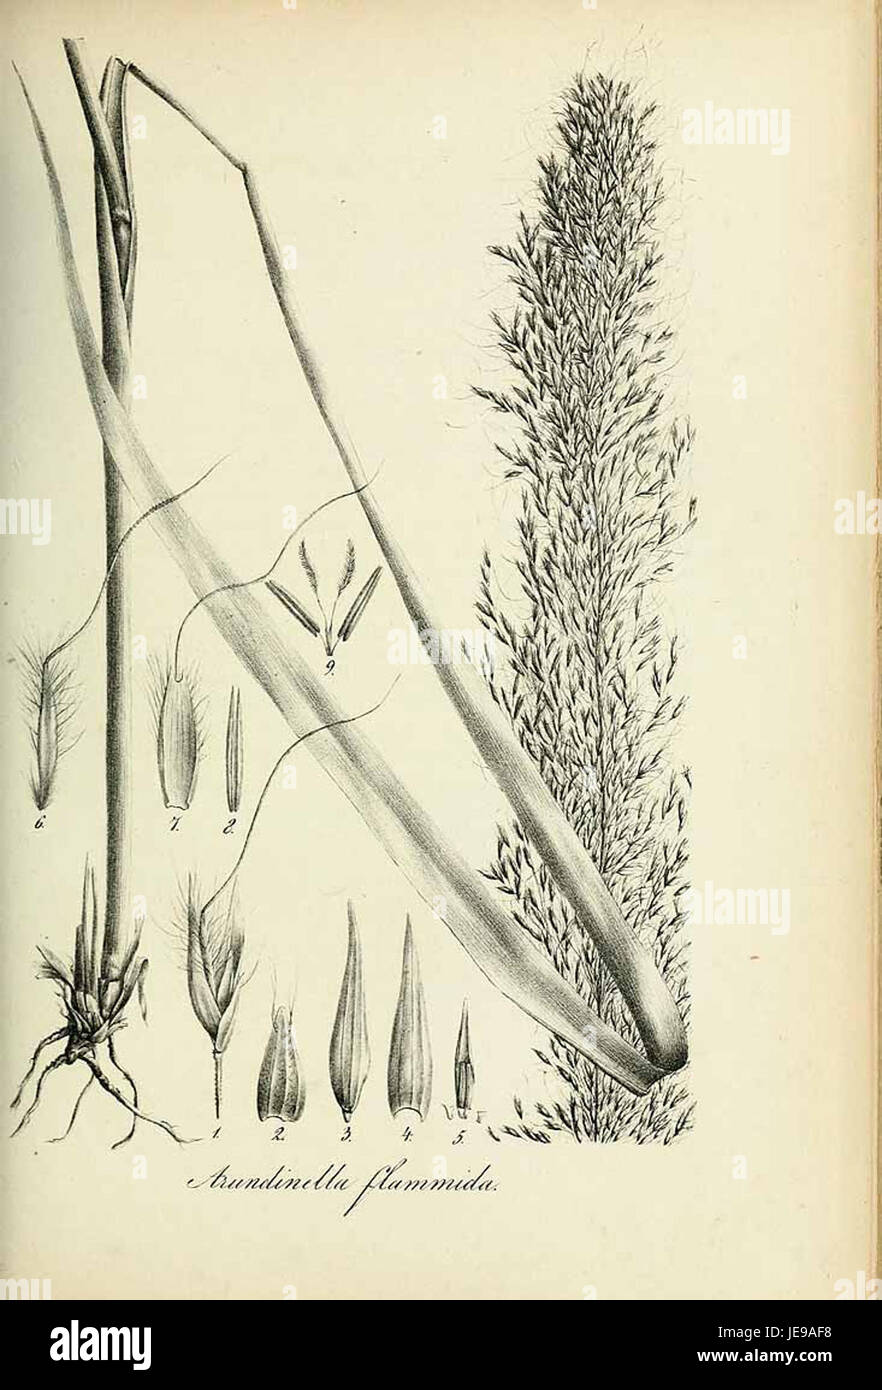 Arundinella flammida - Species graminum - Volume 3 Stock Photo